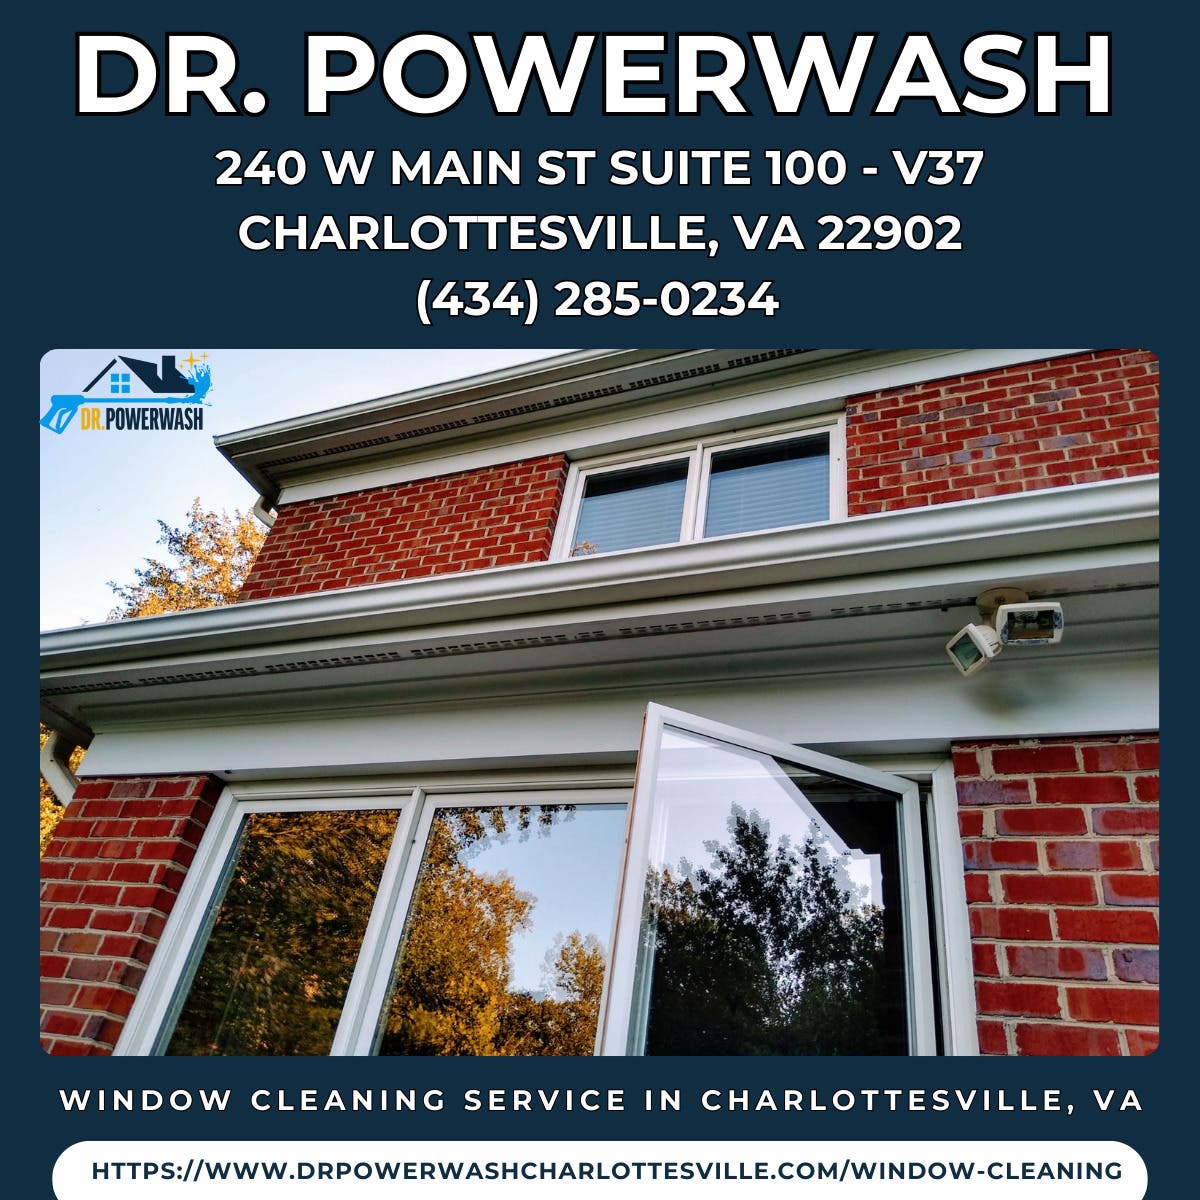 Window Cleaning Service in Charlottesville, VA - Dr. Powerwash.